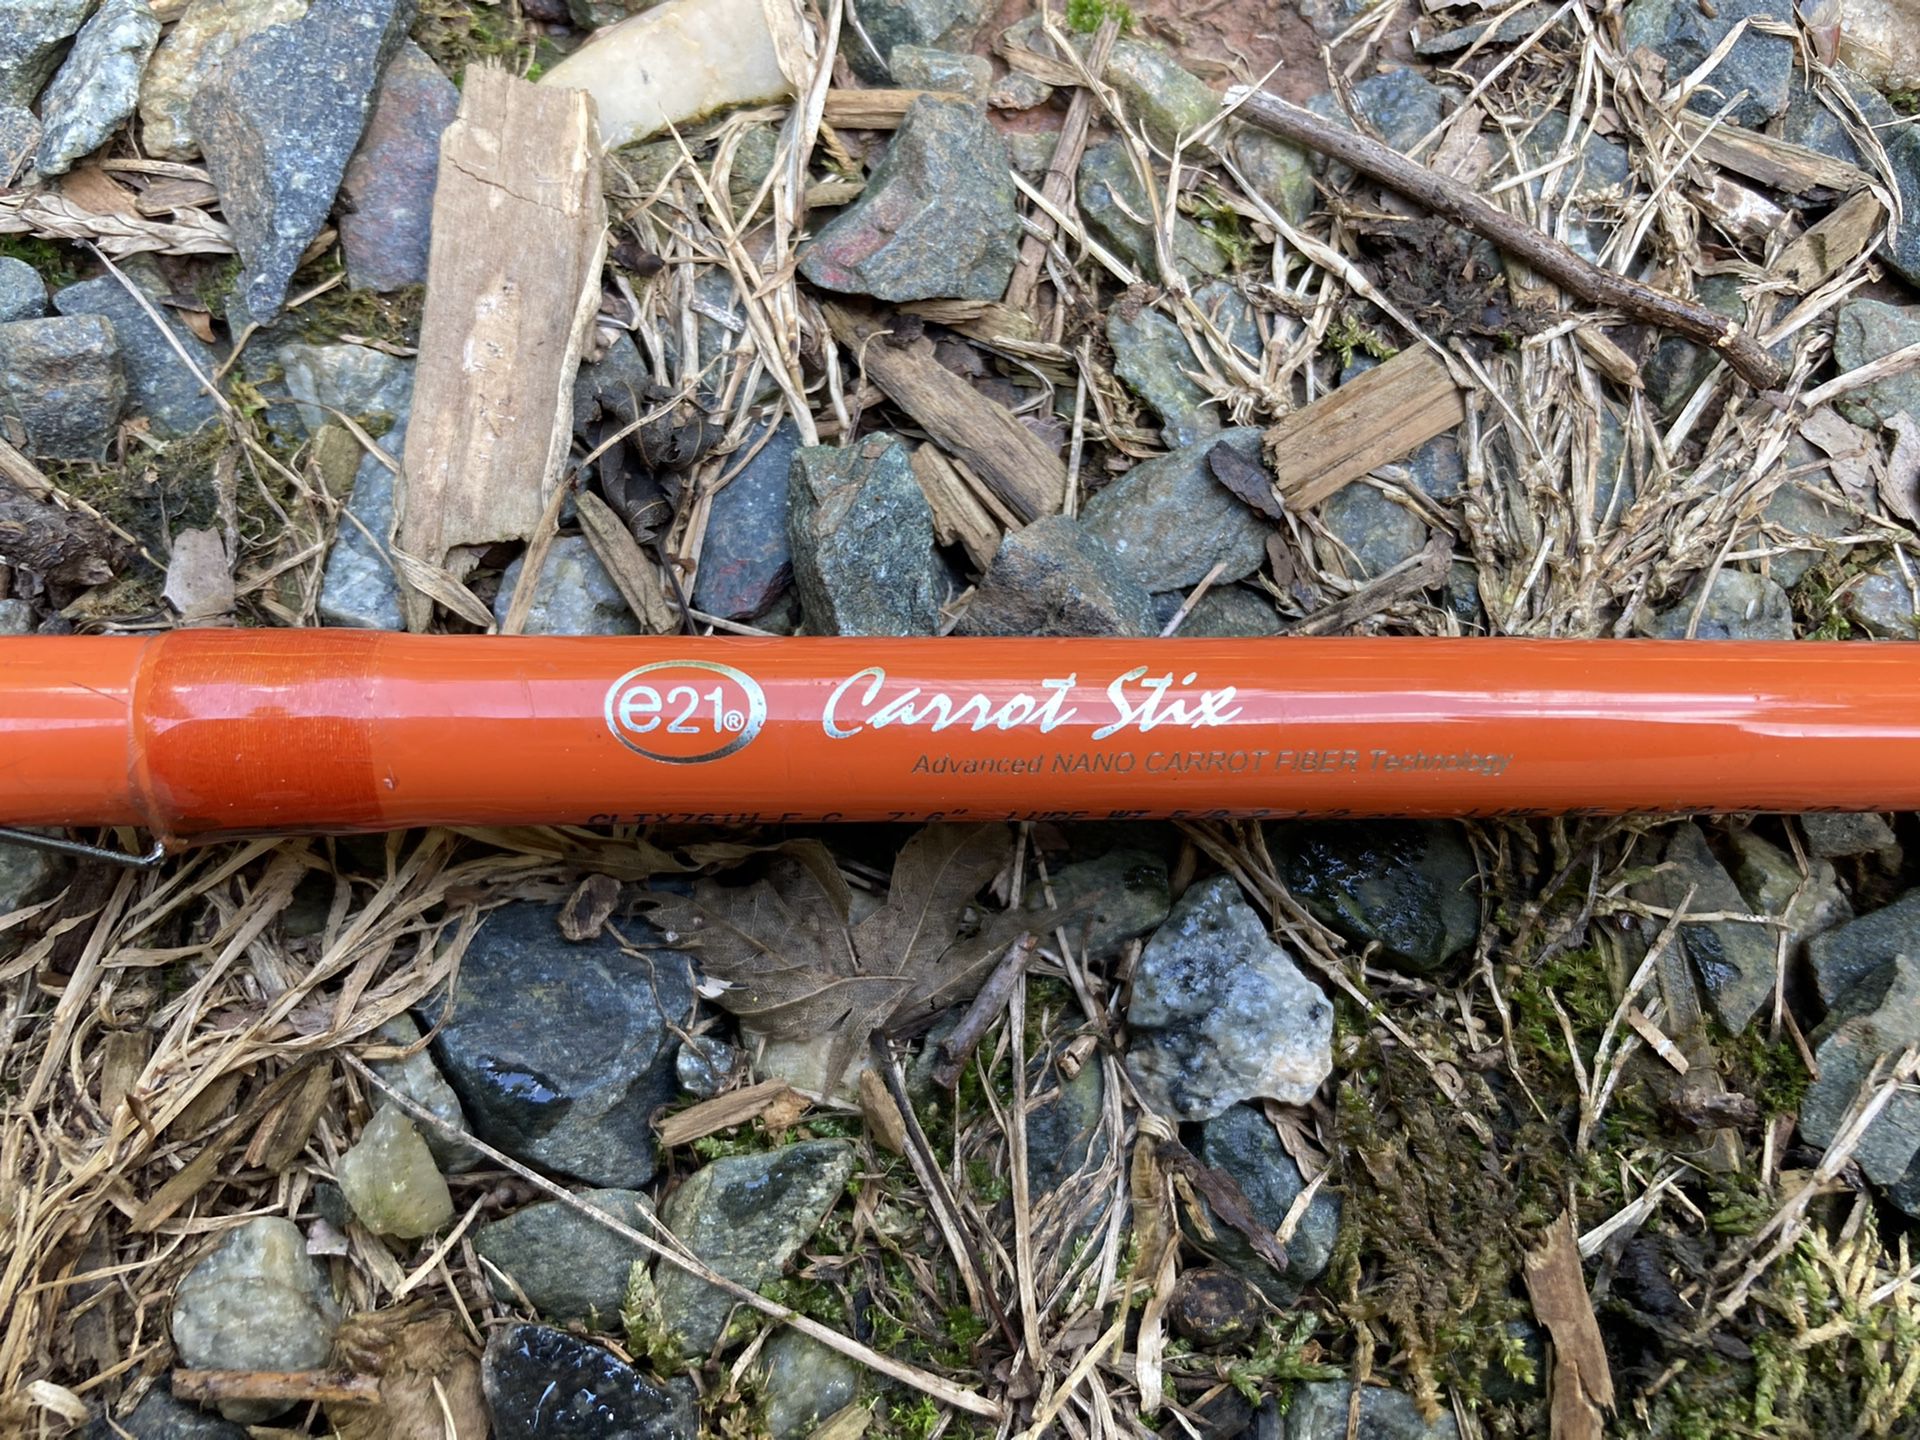 Carrot stix rod fishing bait casting rod 7”6